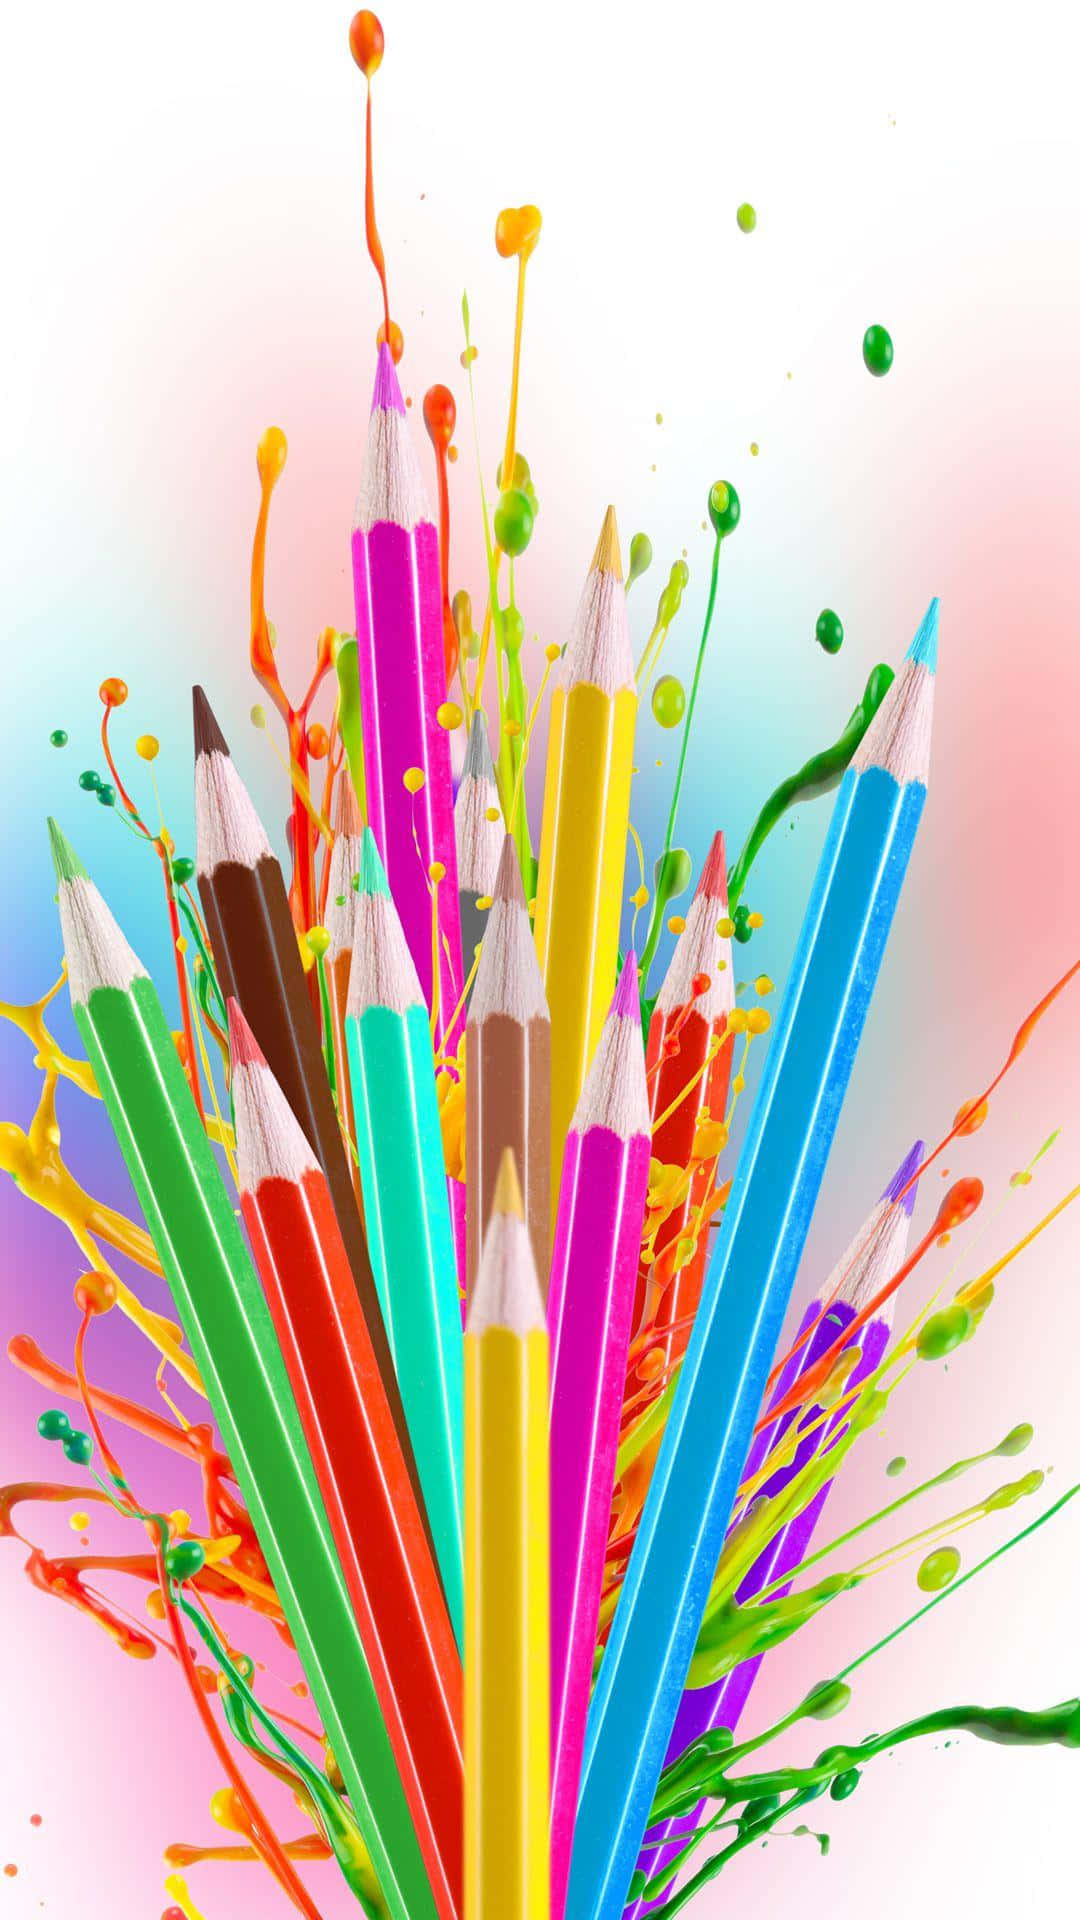 Crayon Spectrum: A Vibrant Background